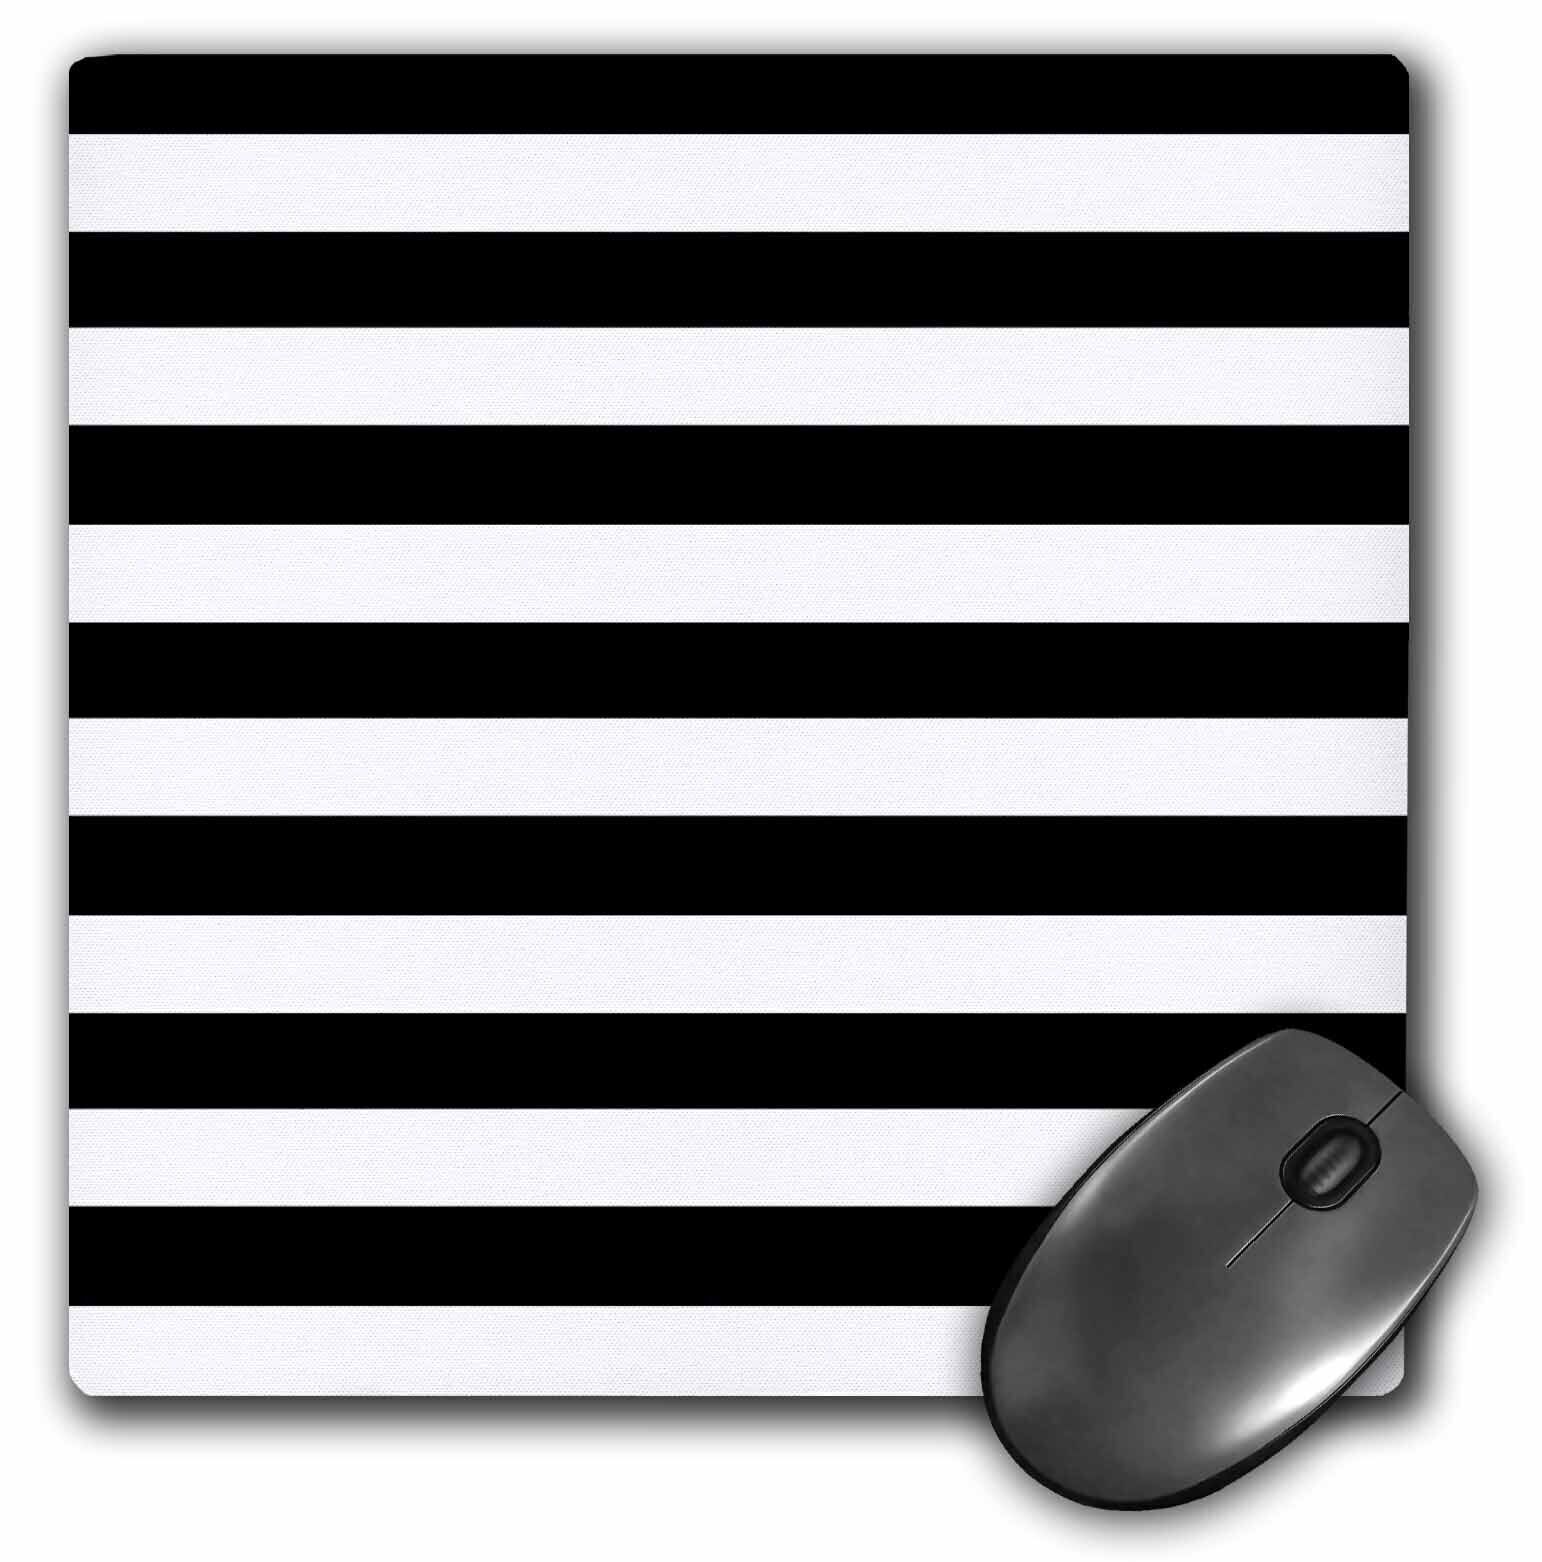 3dRose Black and White Stripes MousePad